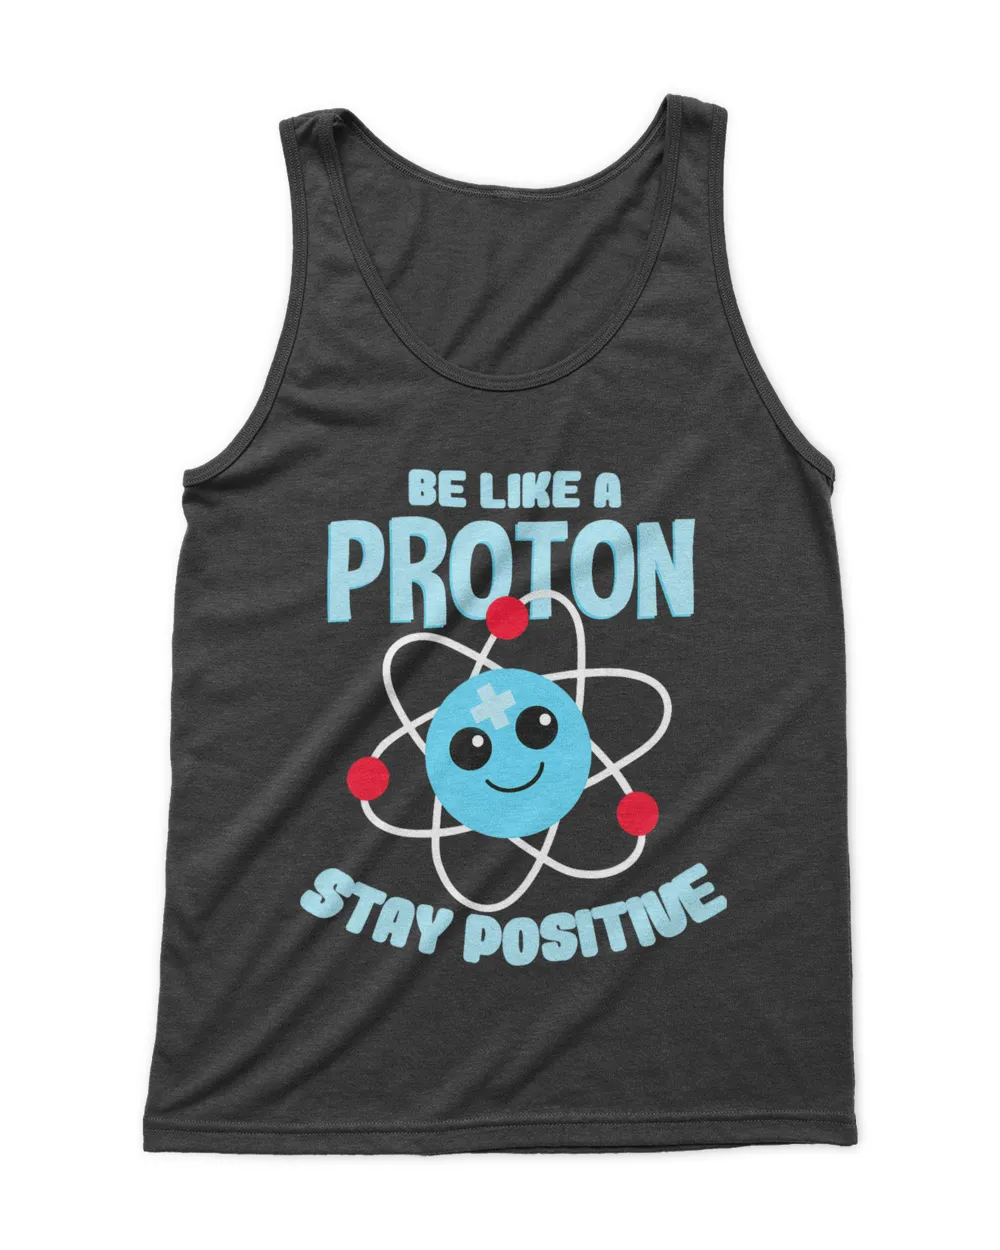 Be like a Proton Stay Positive Nerd Geek Science